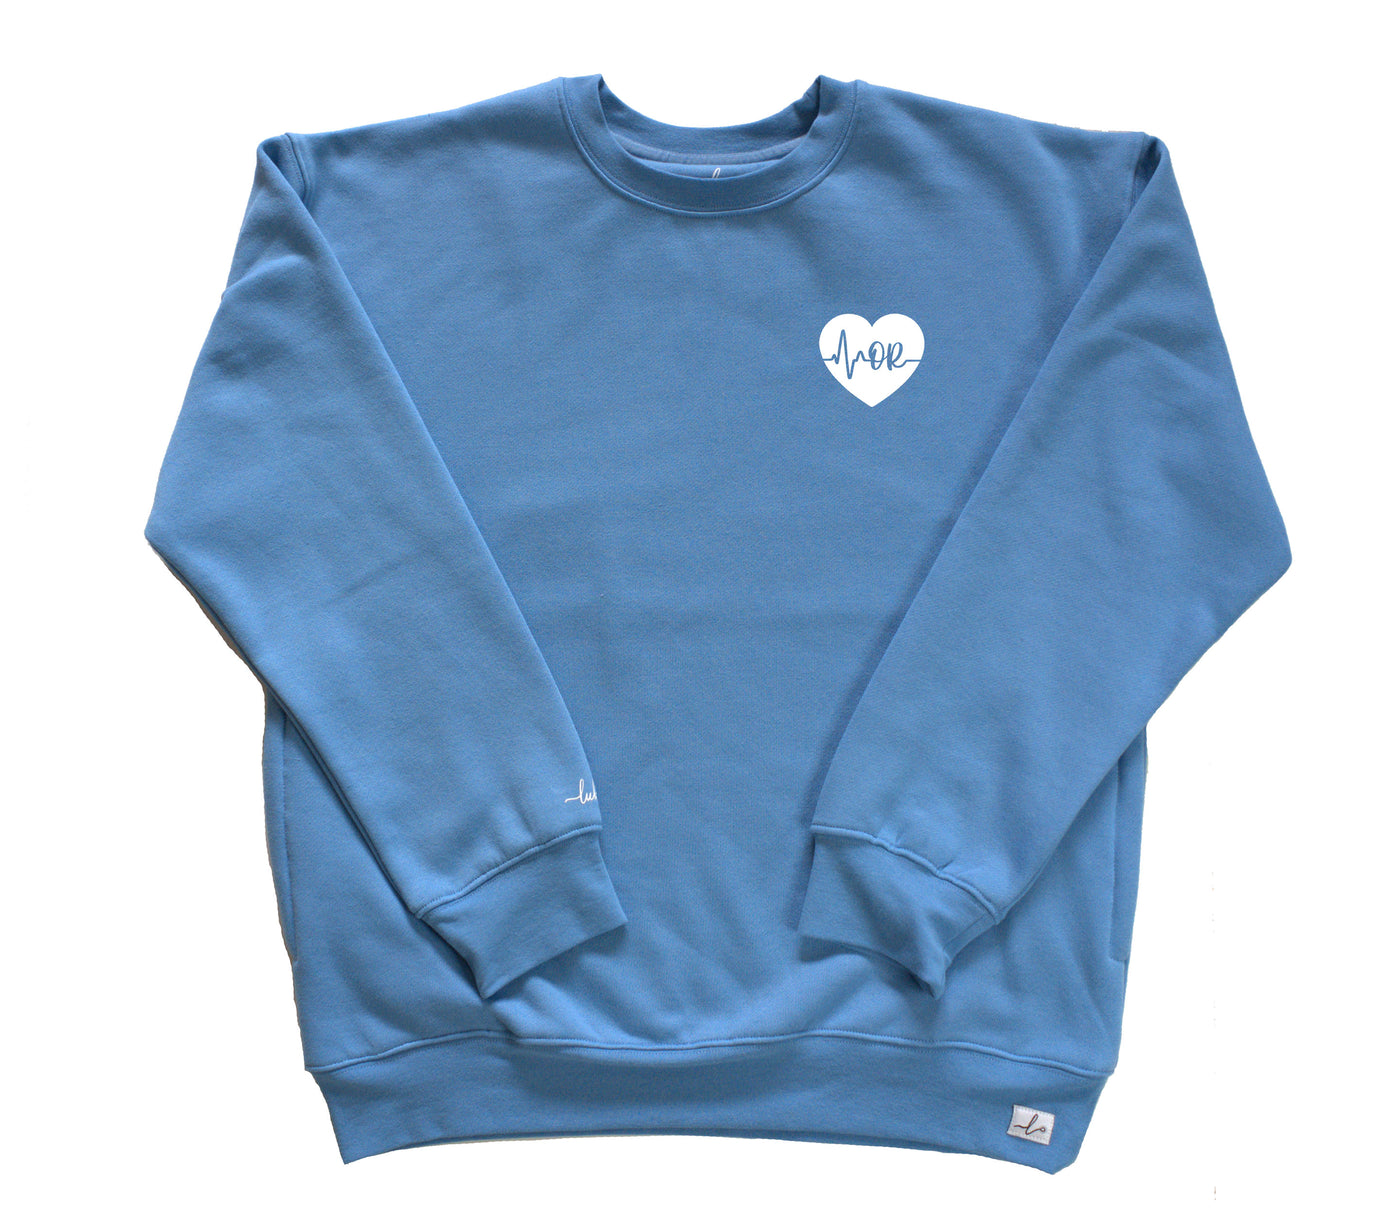 OR ECG Heart - Pocketed Crew Sweatshirt